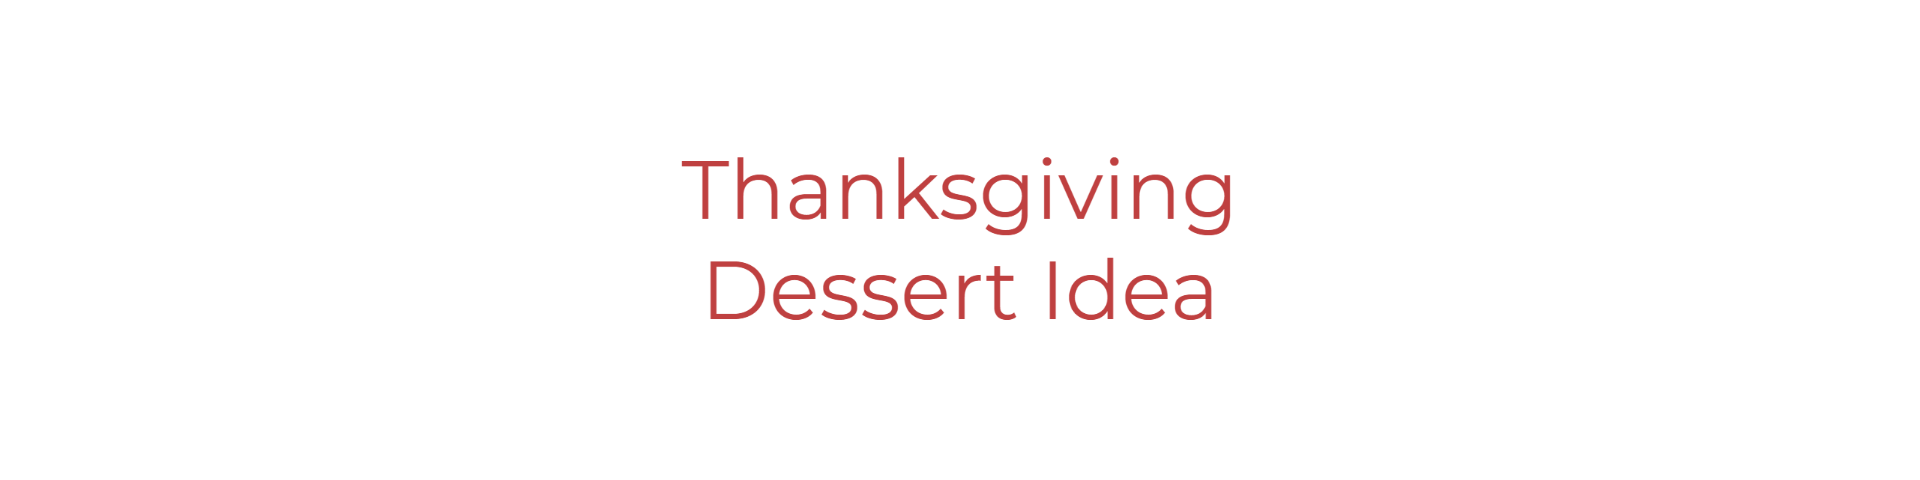 Thanksgiving Dessert Idea